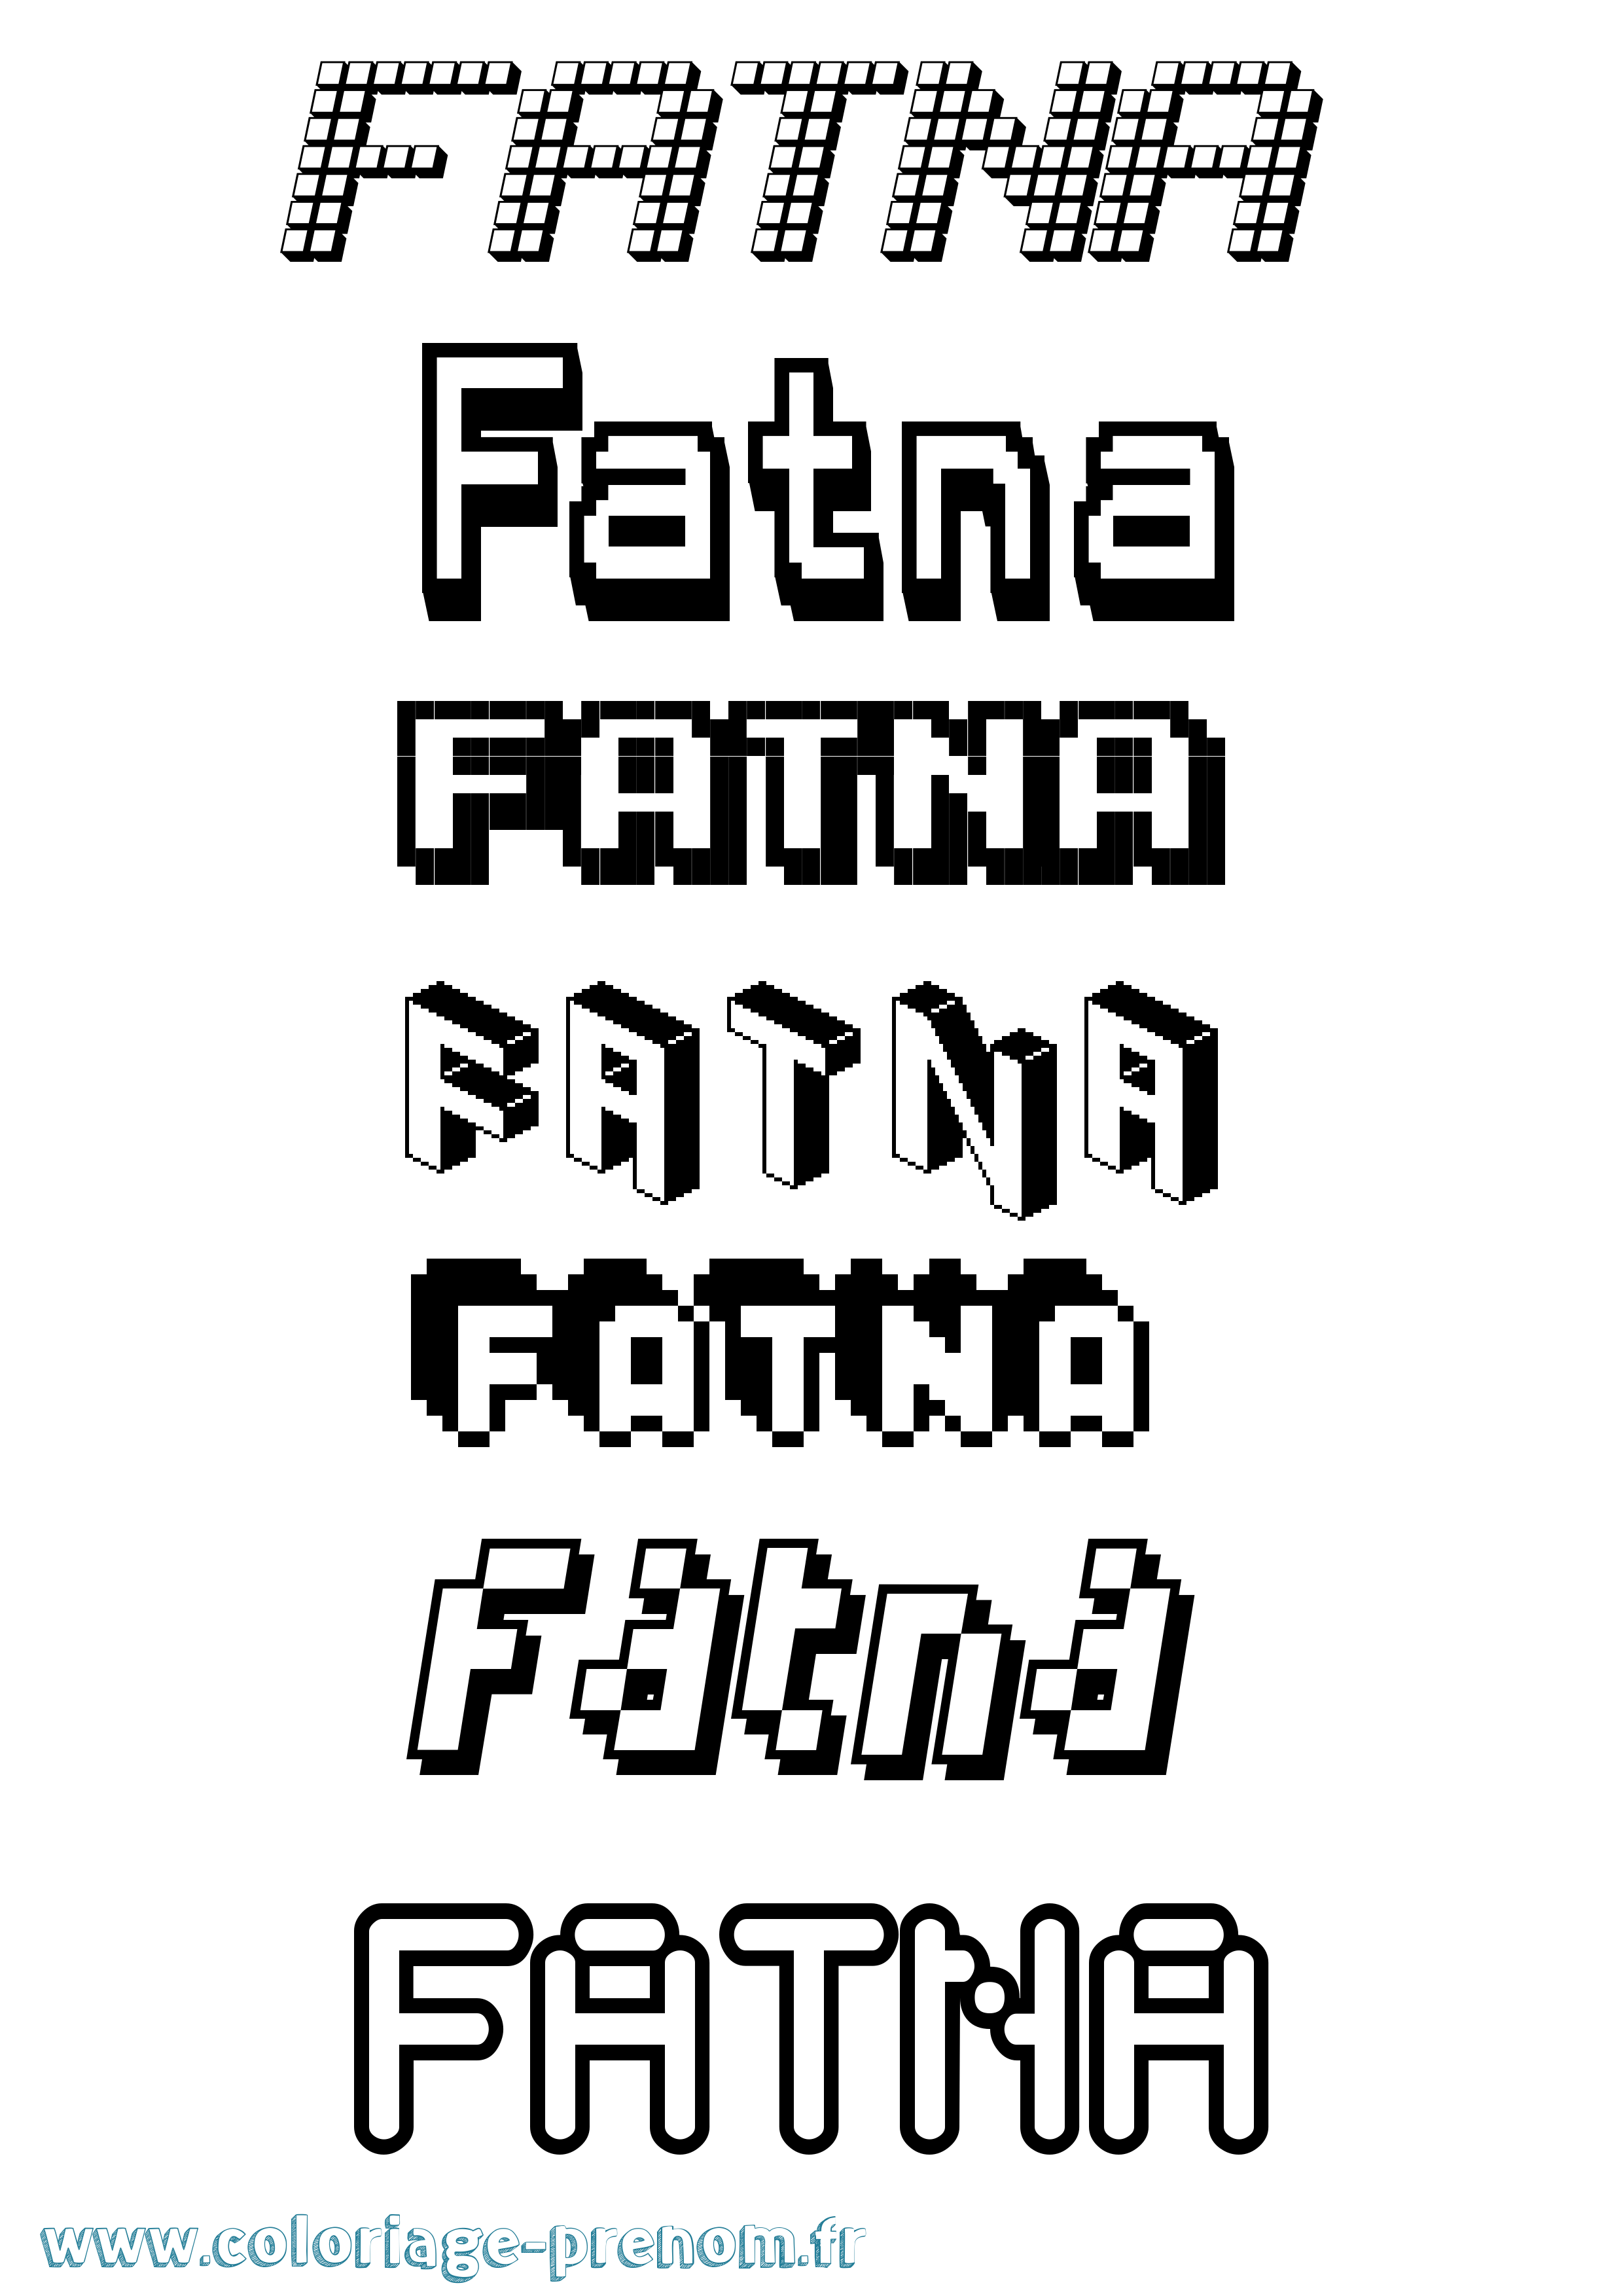 Coloriage prénom Fatna Pixel